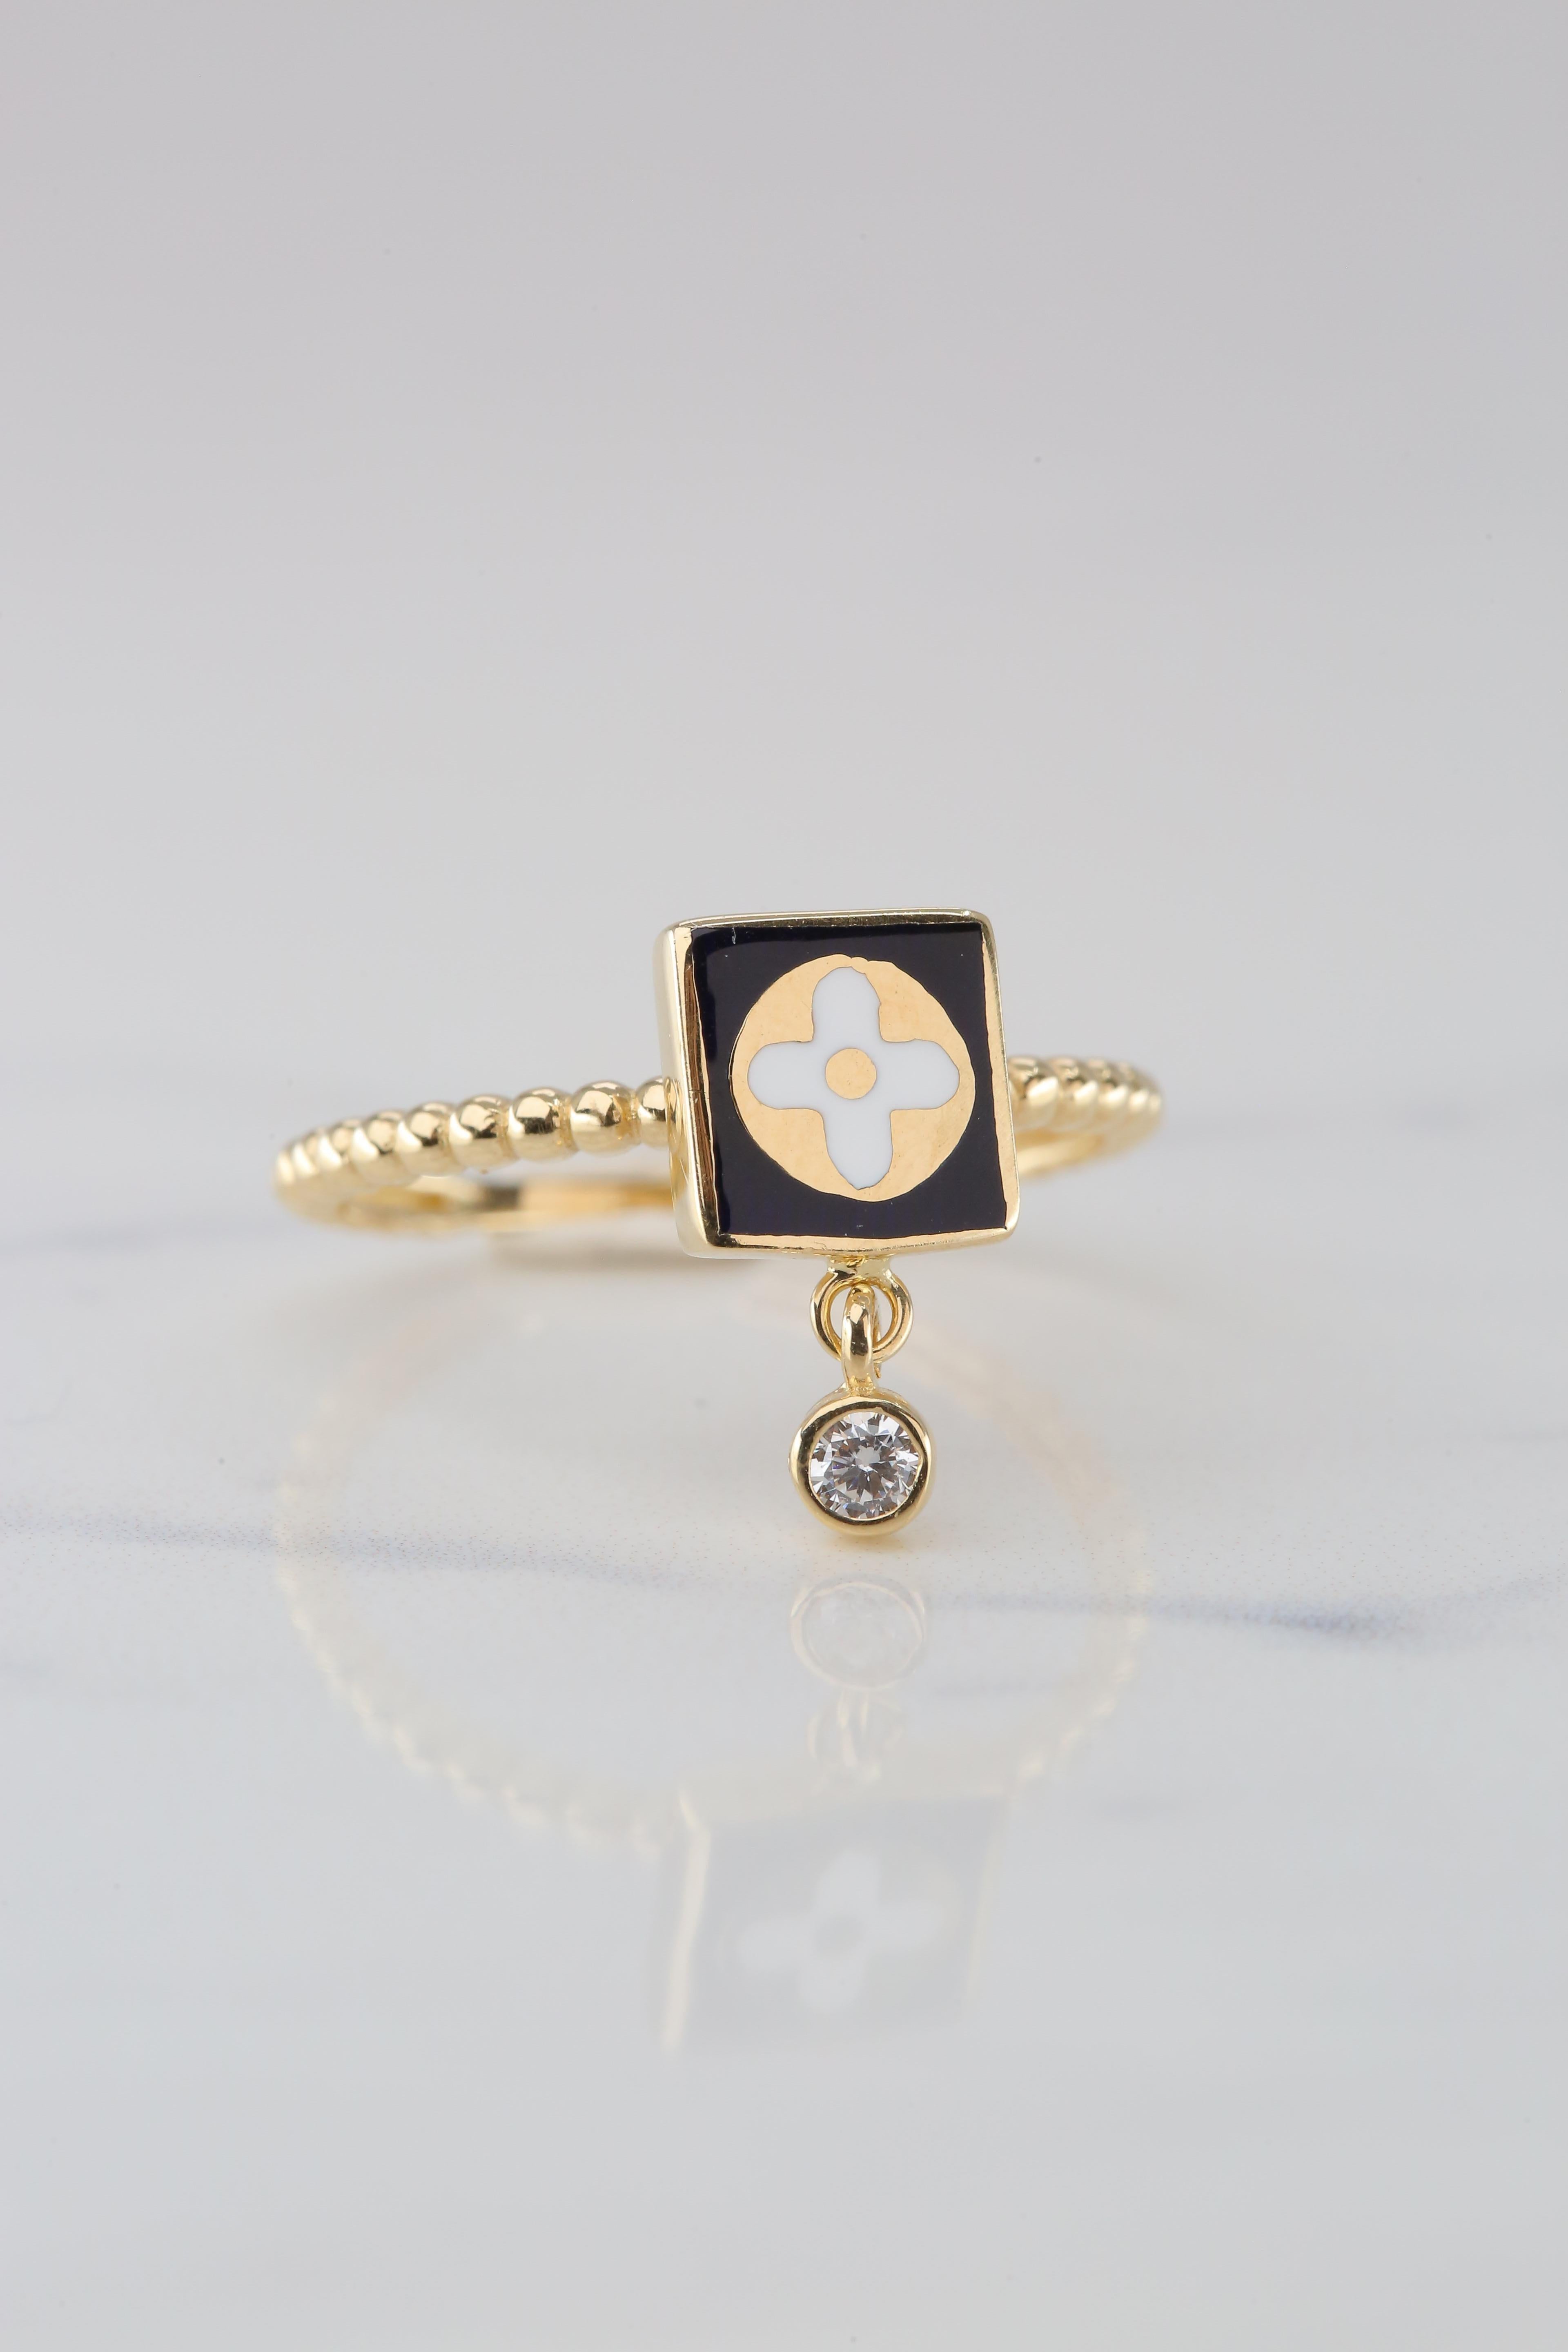 Dainty Zircon Enameled and Lapis Ring, 14K Gold, Minimalist Style Ring 7